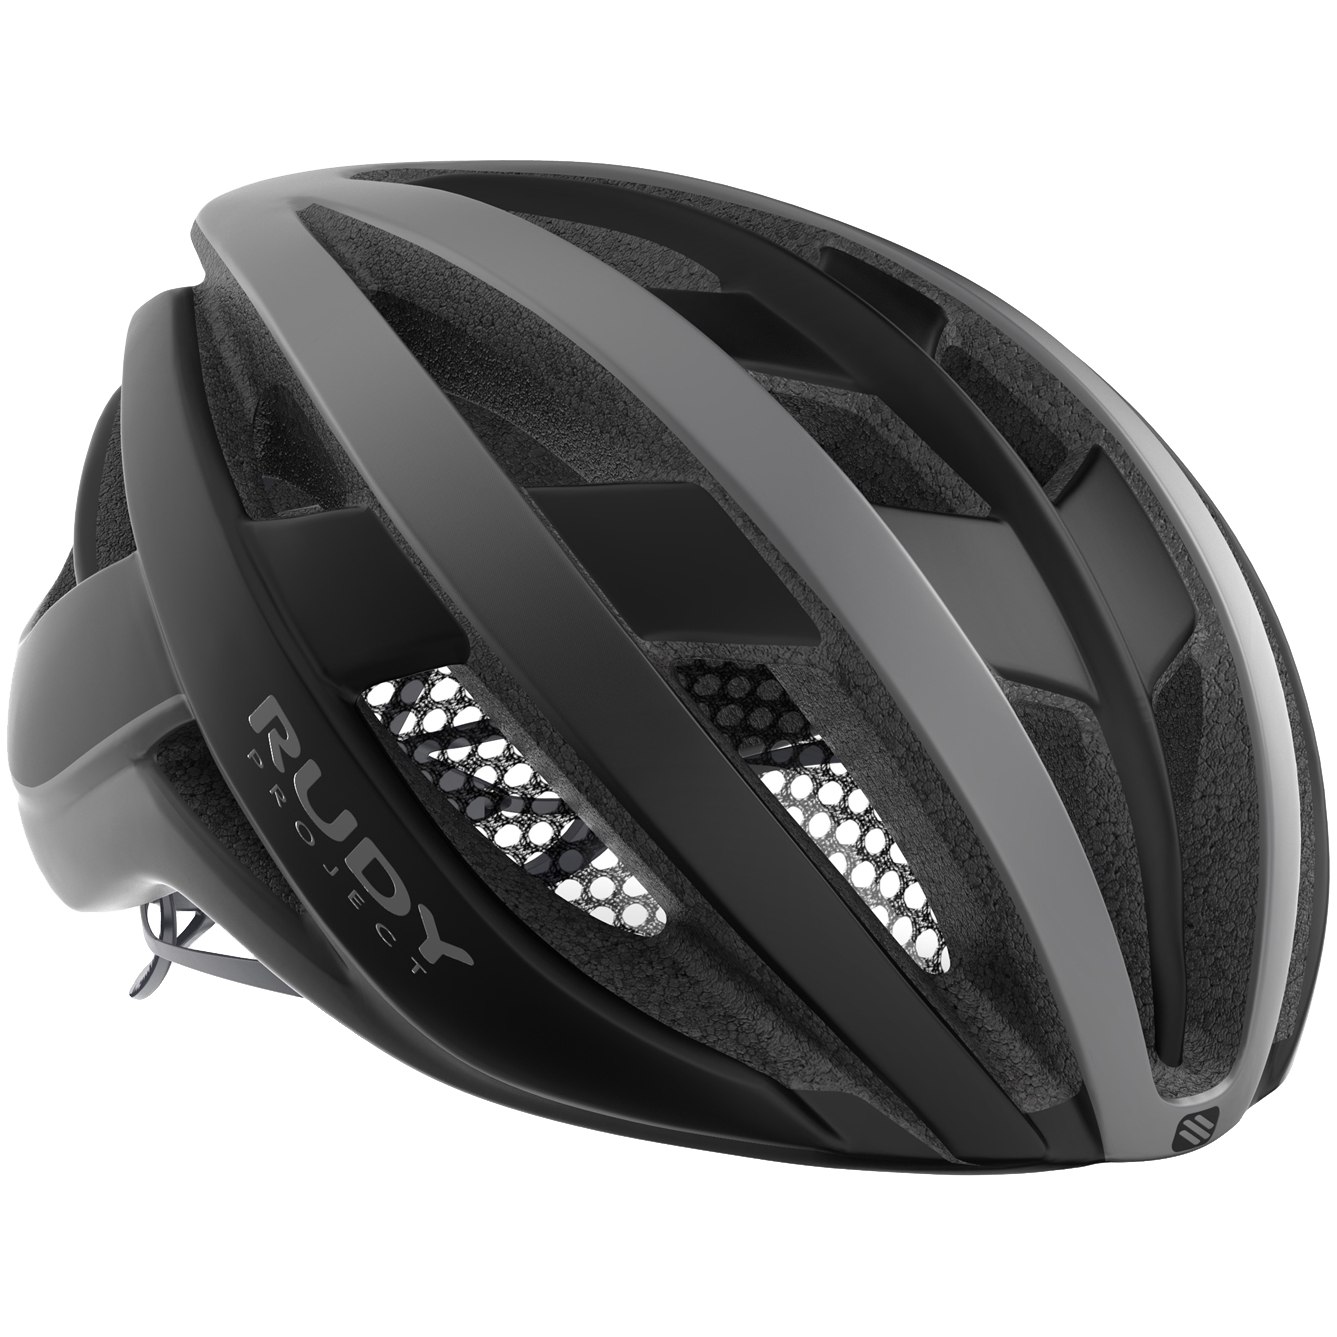 Produktbild von Rudy Project Venger Helm - Titanium/Black (Matte)